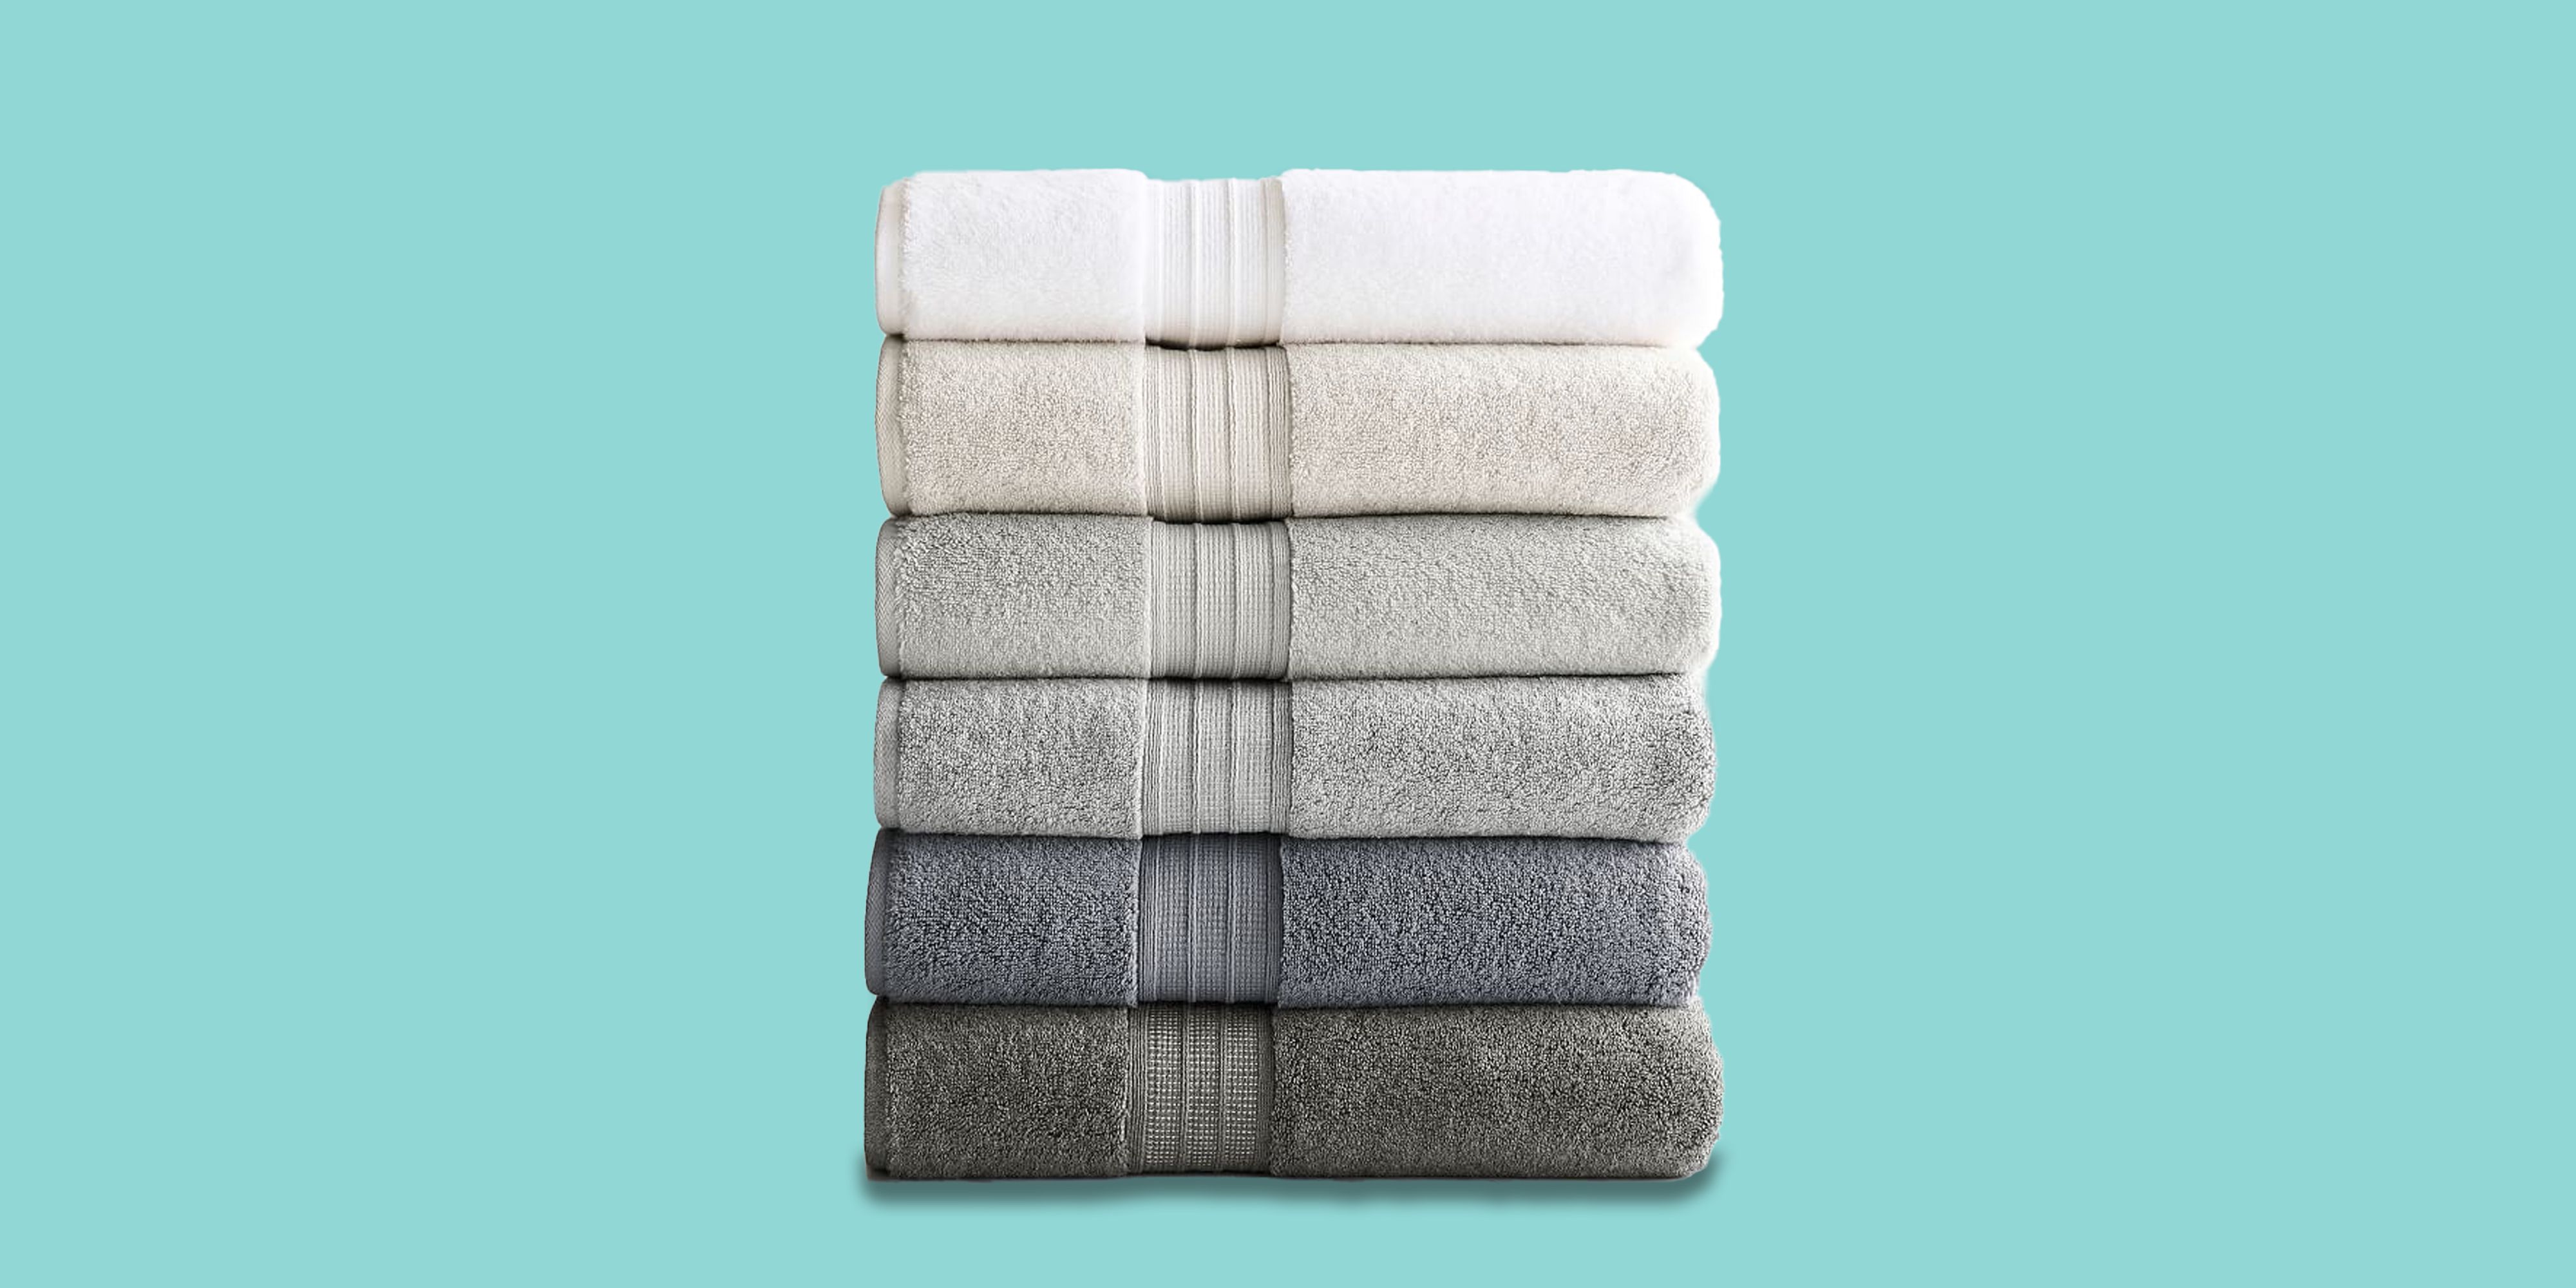 11 Best Bath Towels 2022 - Soft and Absorbent Bath Towel Reviews